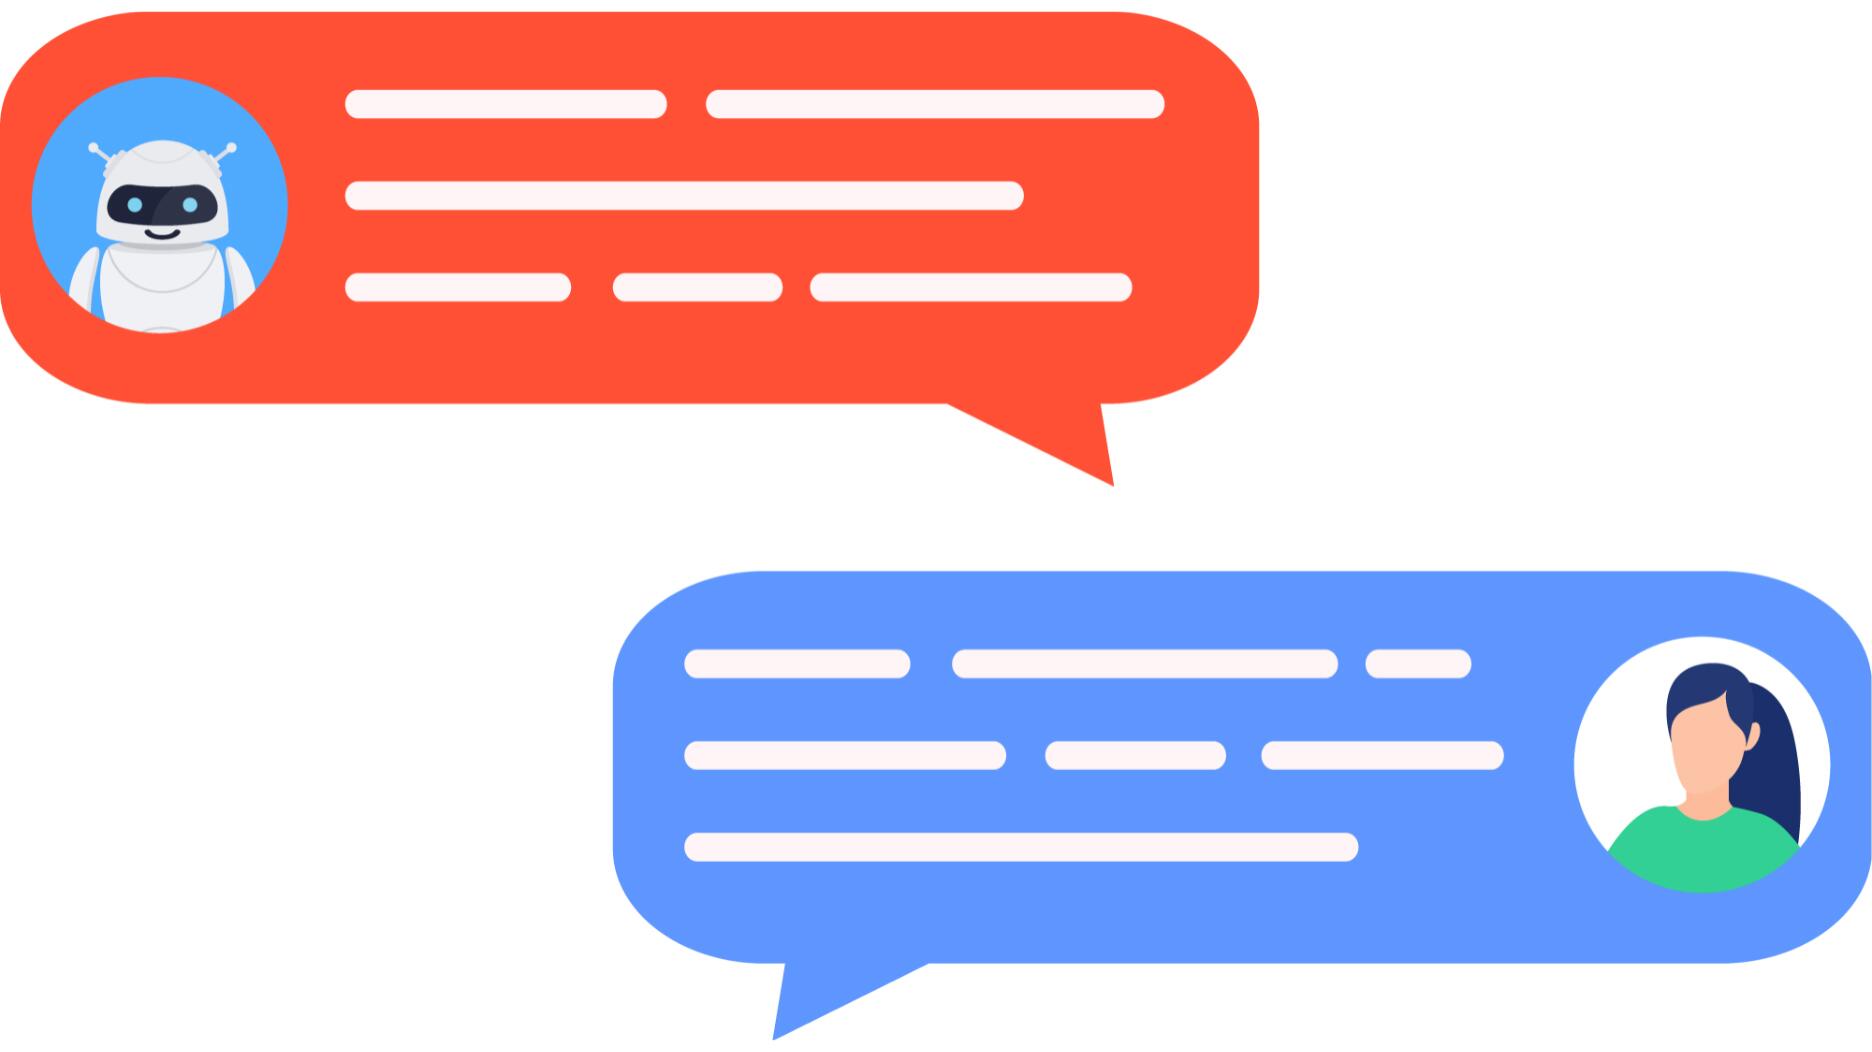 A text conversation between a chatbot and a human 